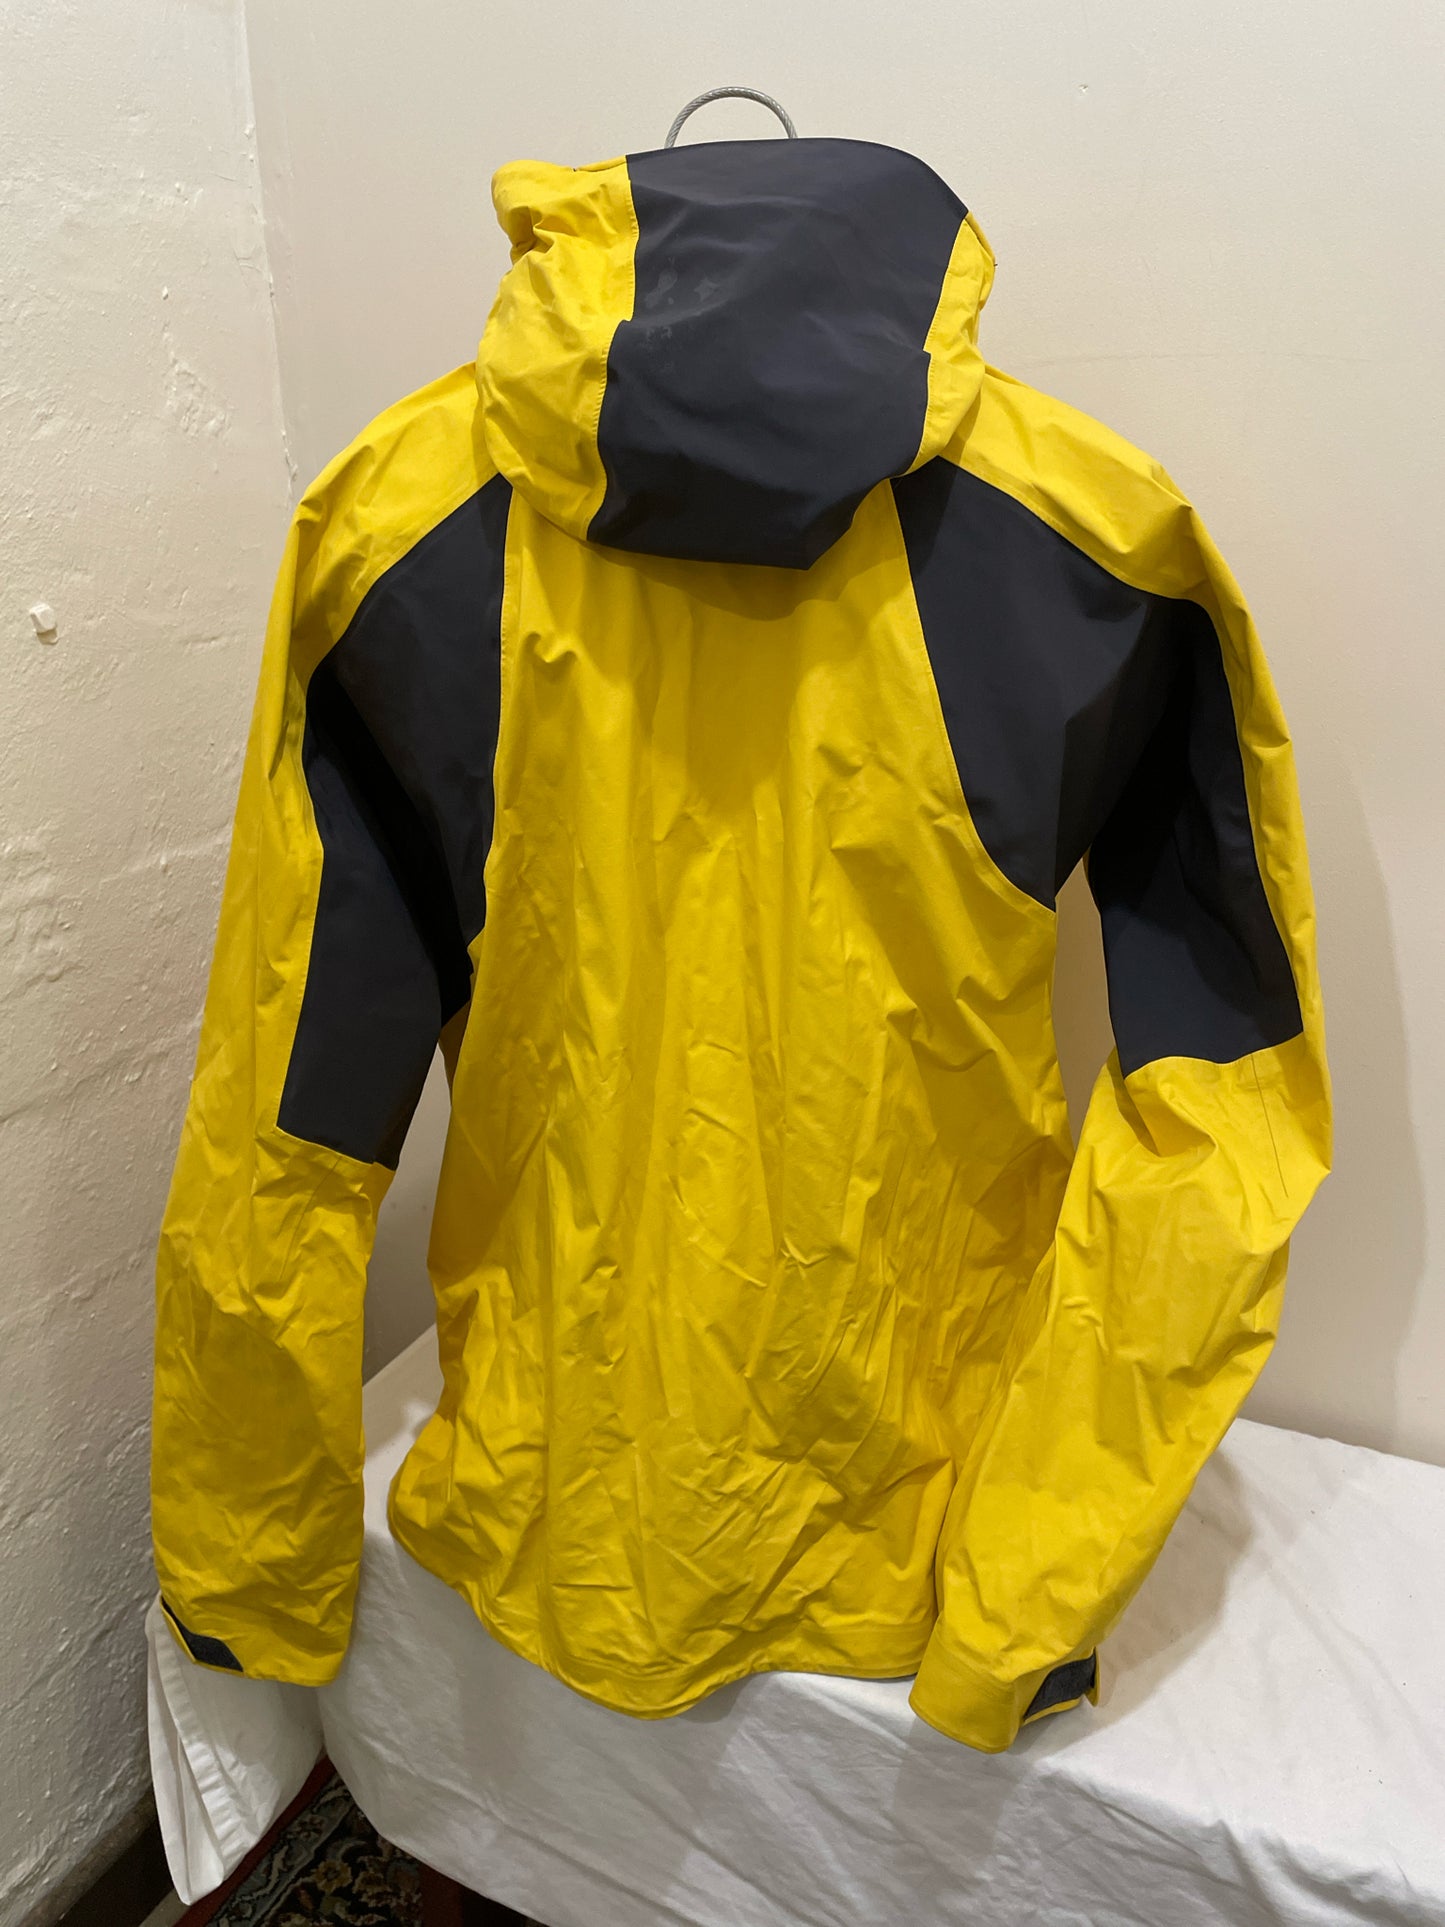 Mountain Hardwear Rain Shell Jacket Men's XL